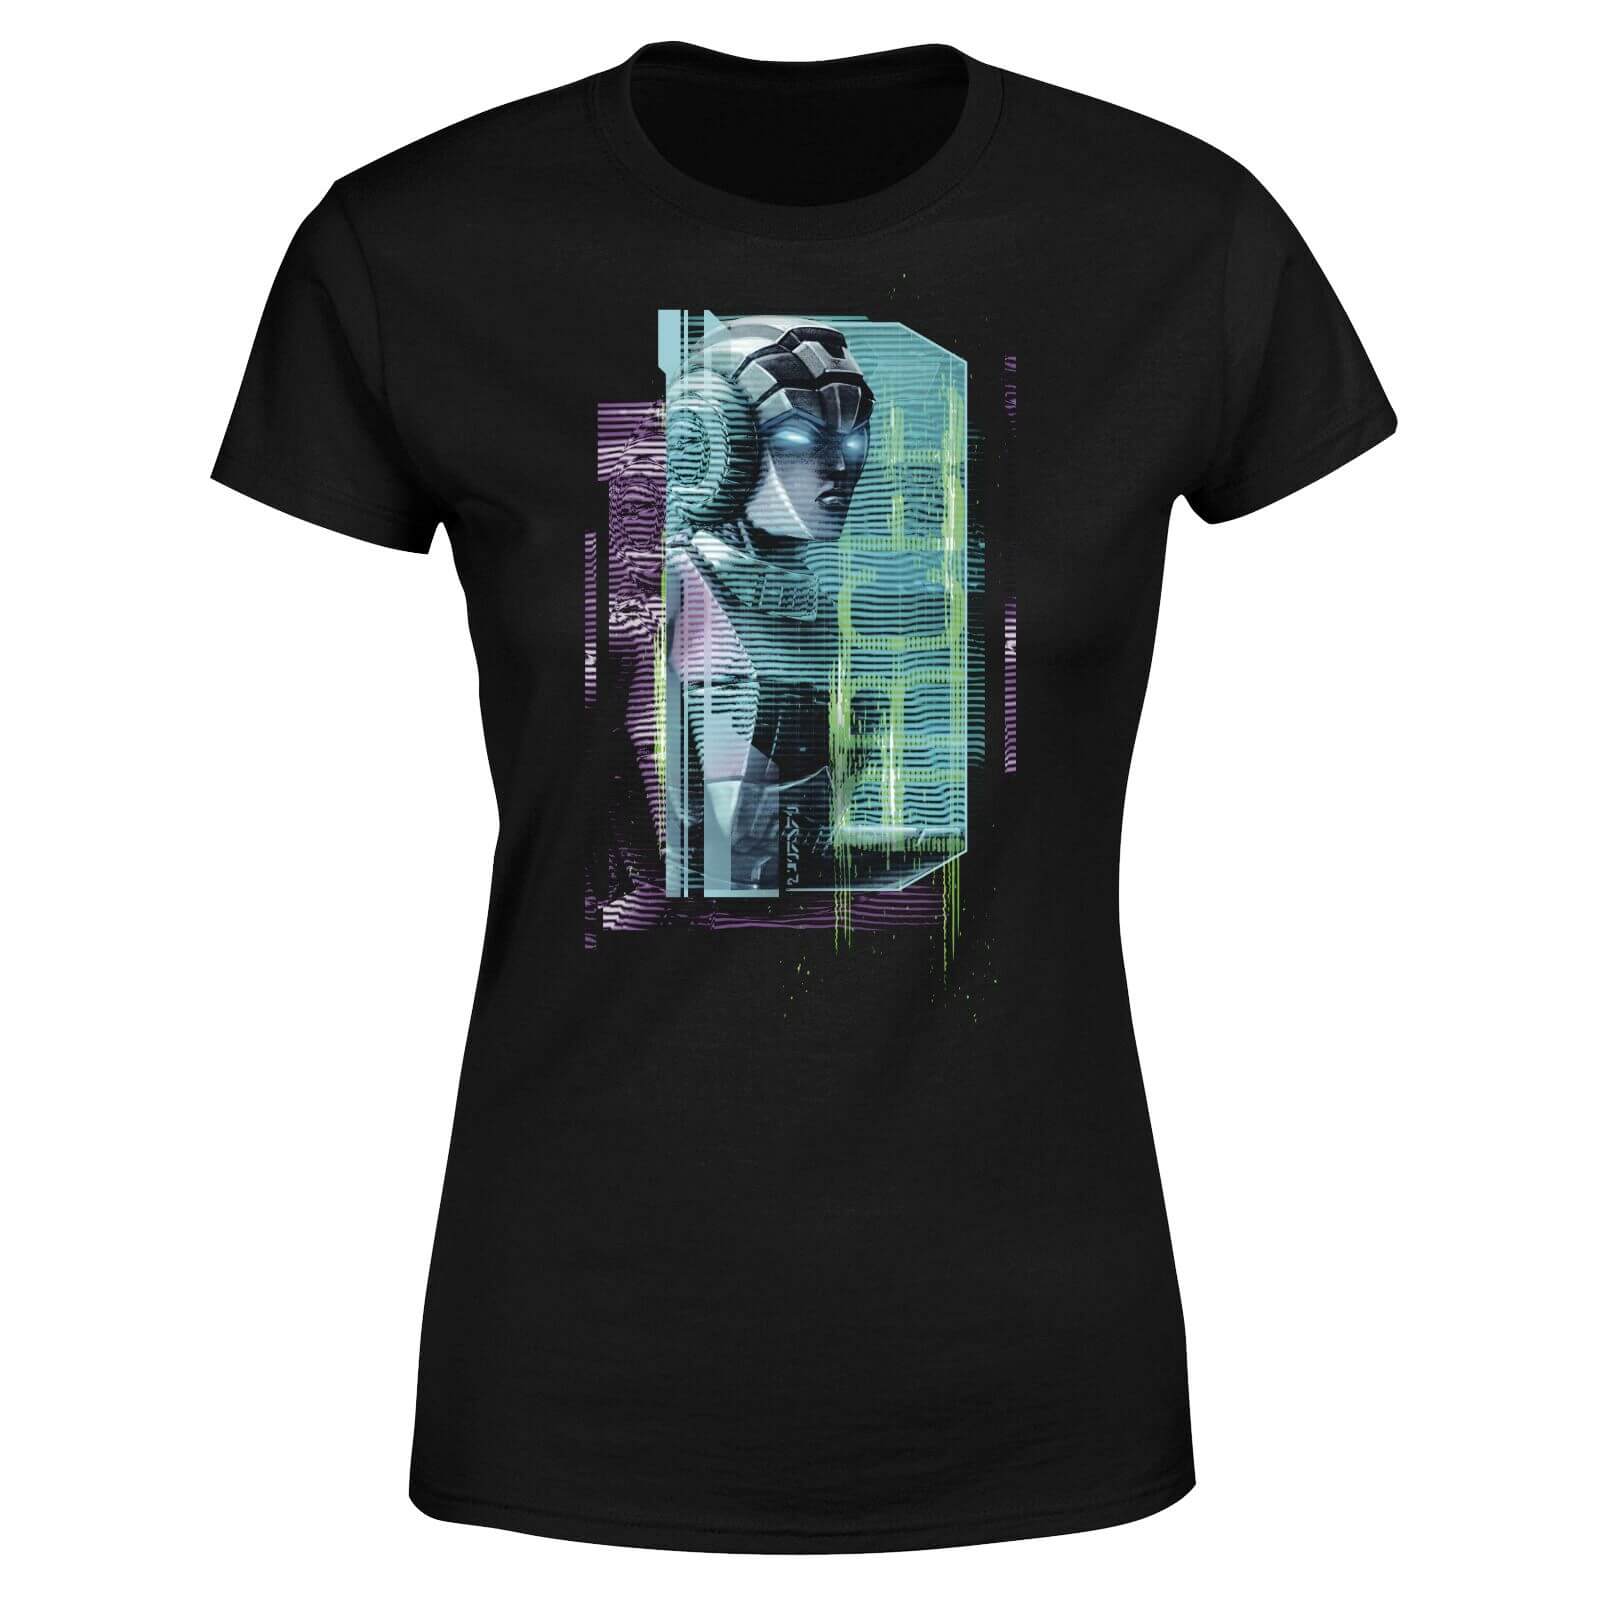 Transformers Arcee Glitch Women's T-Shirt - Black - S - Black